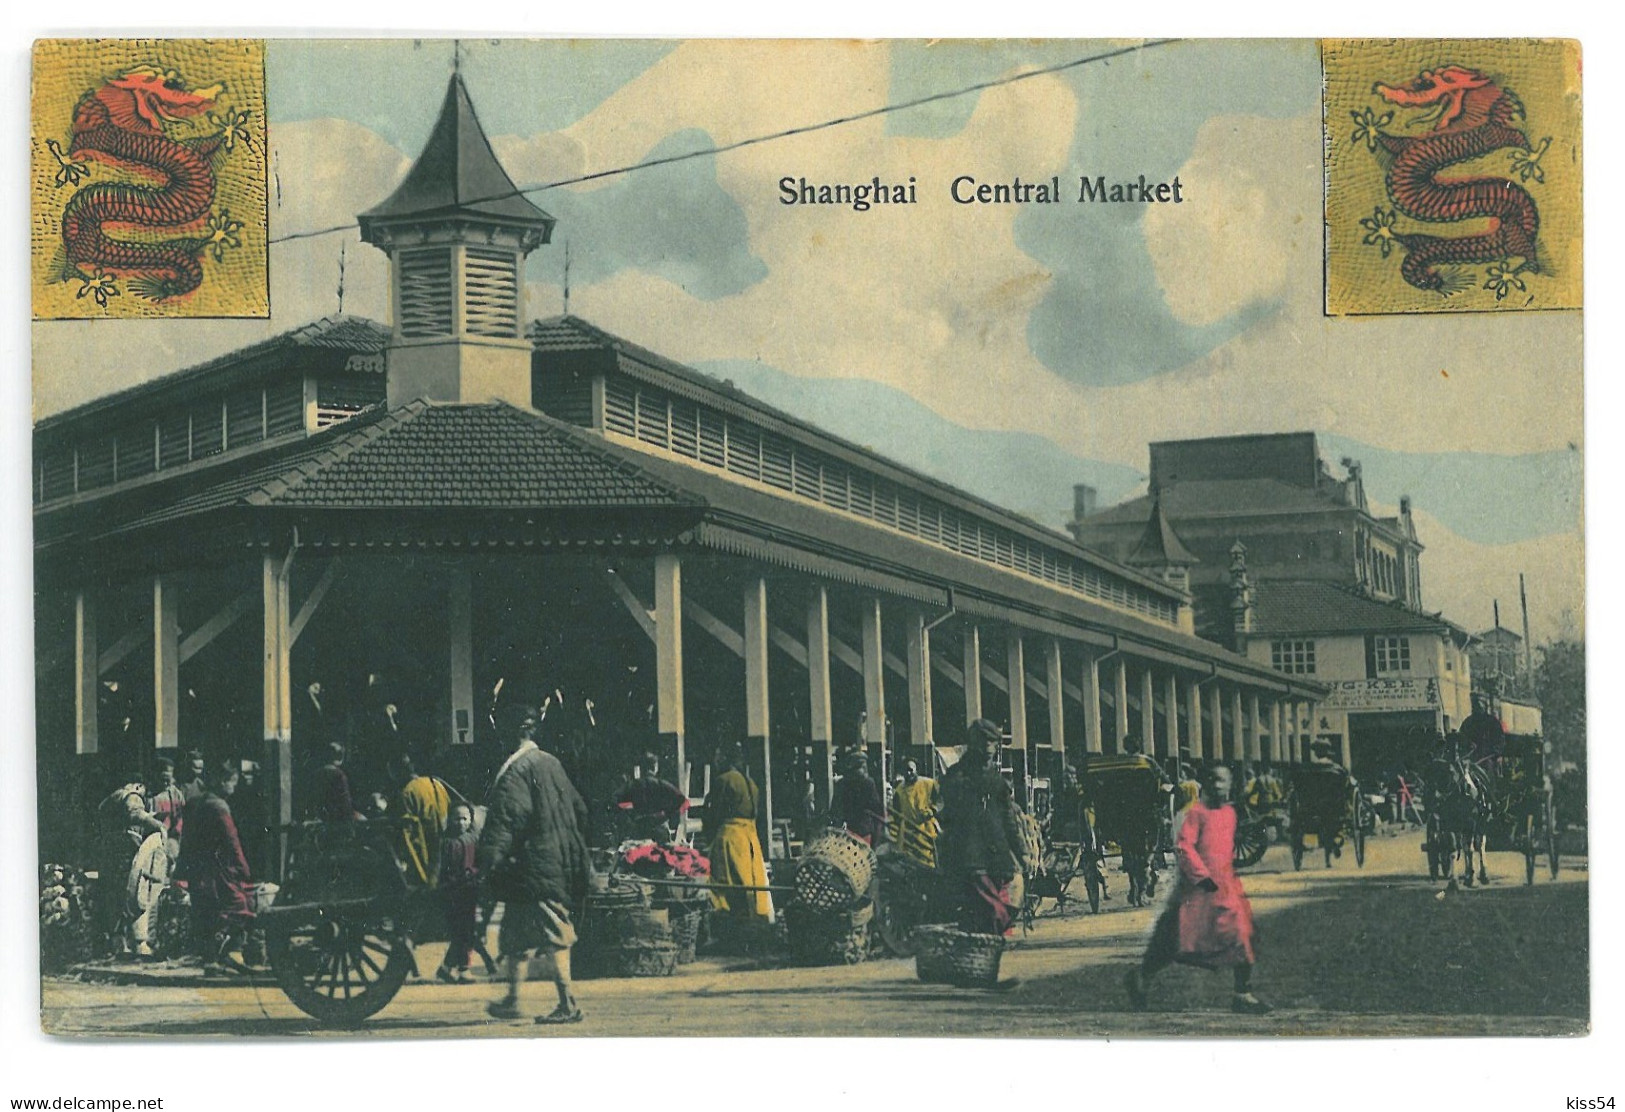 CH 57 - 20478 SHANGHAI, Market, China - Old Postcard - Unused - Chine